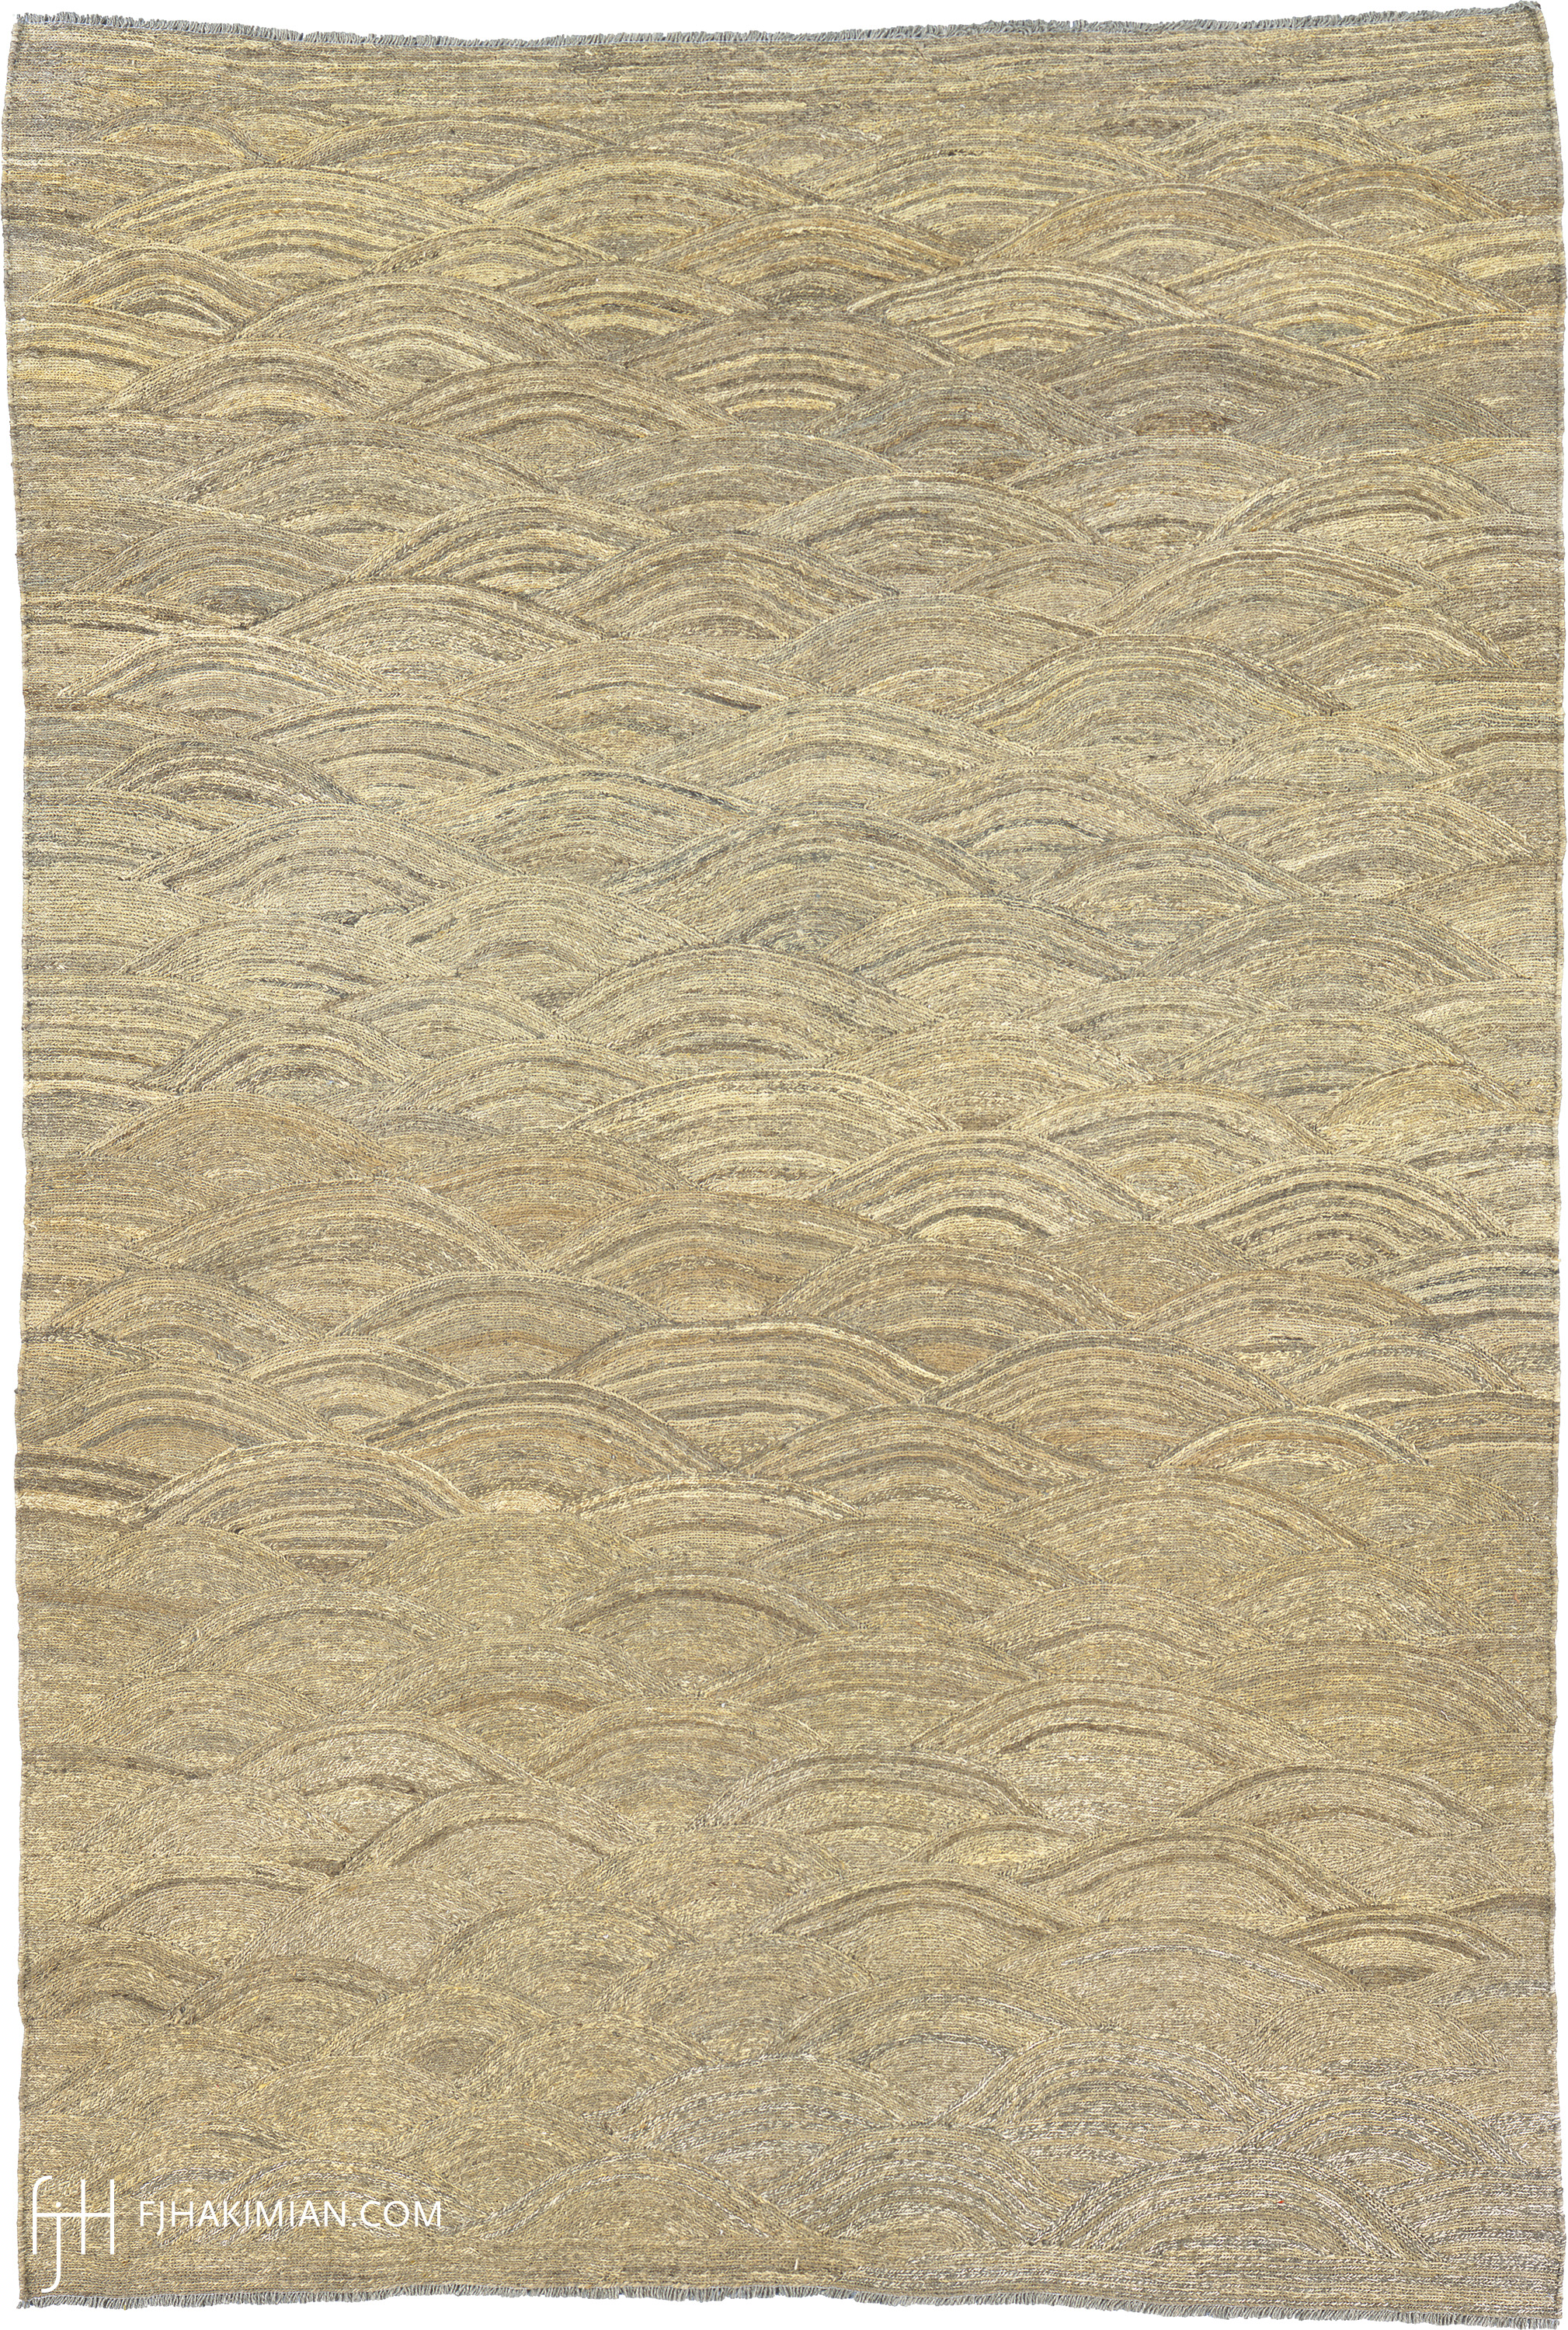 16077 Soumak Design | Custom Soumak Carpet | FJ Hakimian | Carpet Gallery in NY